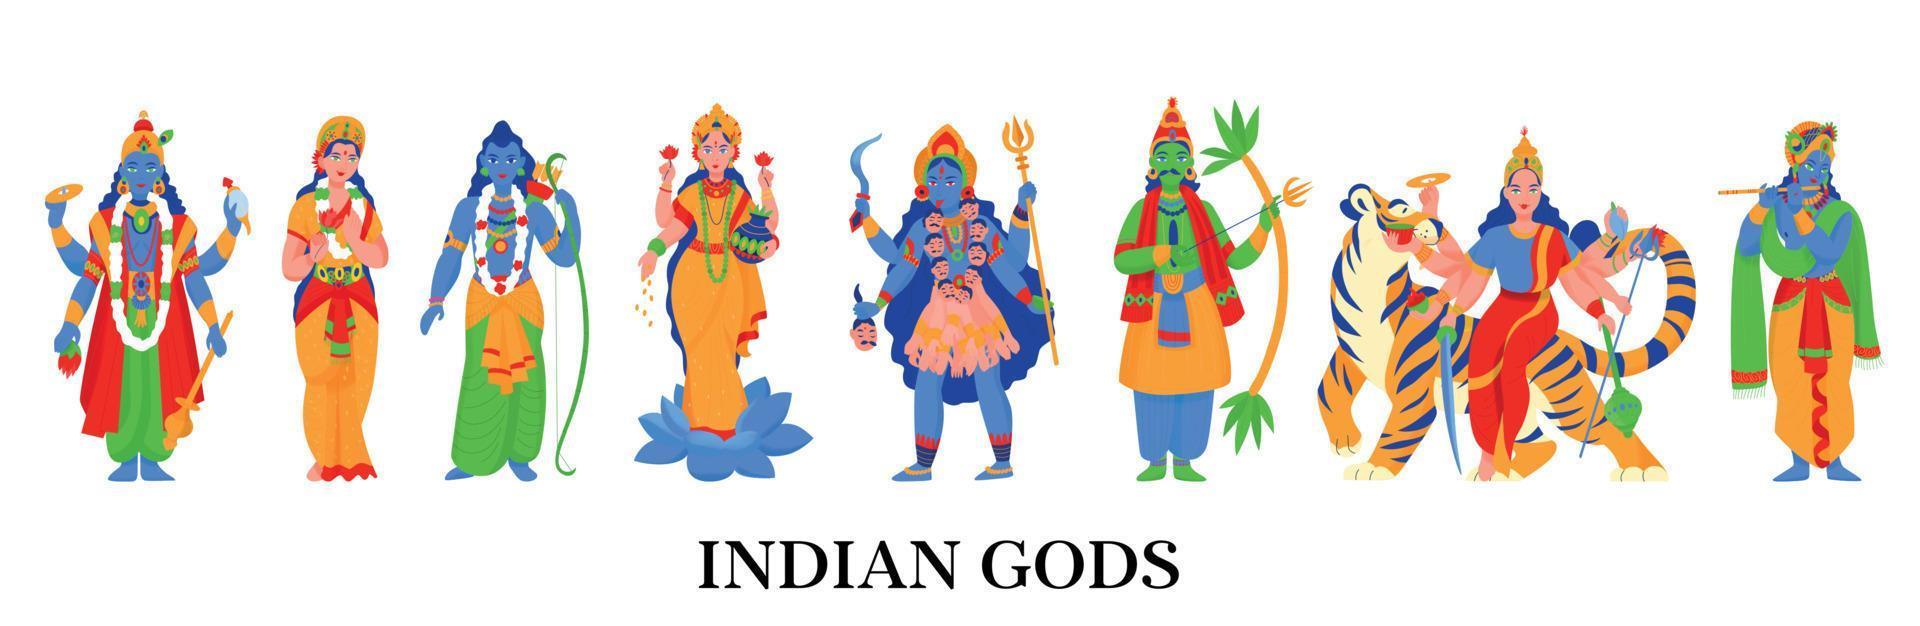 farbiger alter indischer hindu-götter-ikonensatz vektor